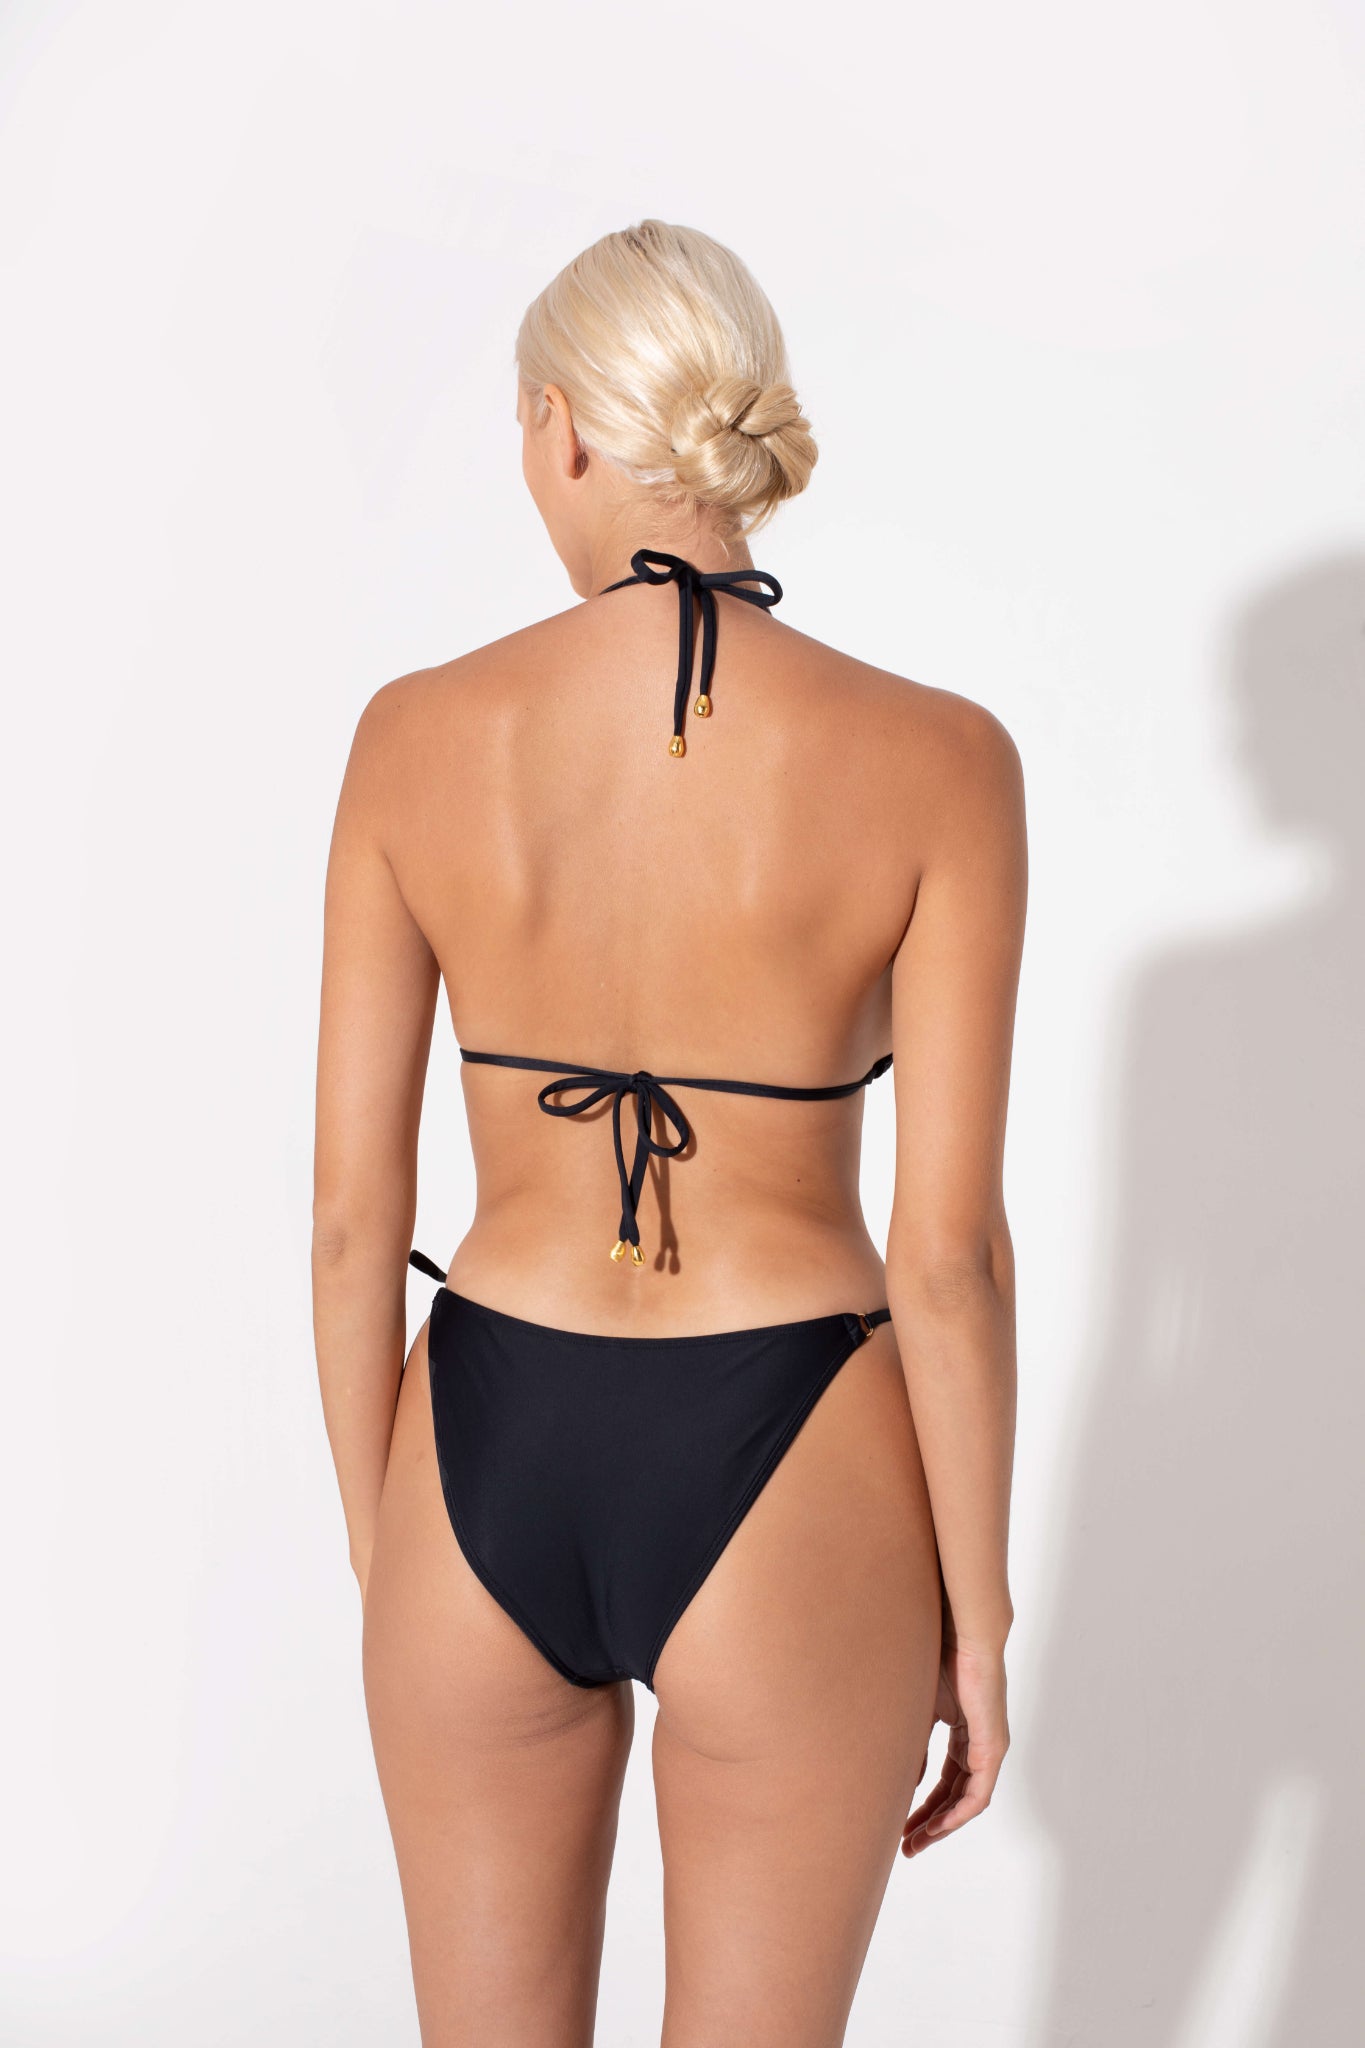 black bikini back side, gold accesories, classic and elegant design in black color and soft fabrics for swimwear